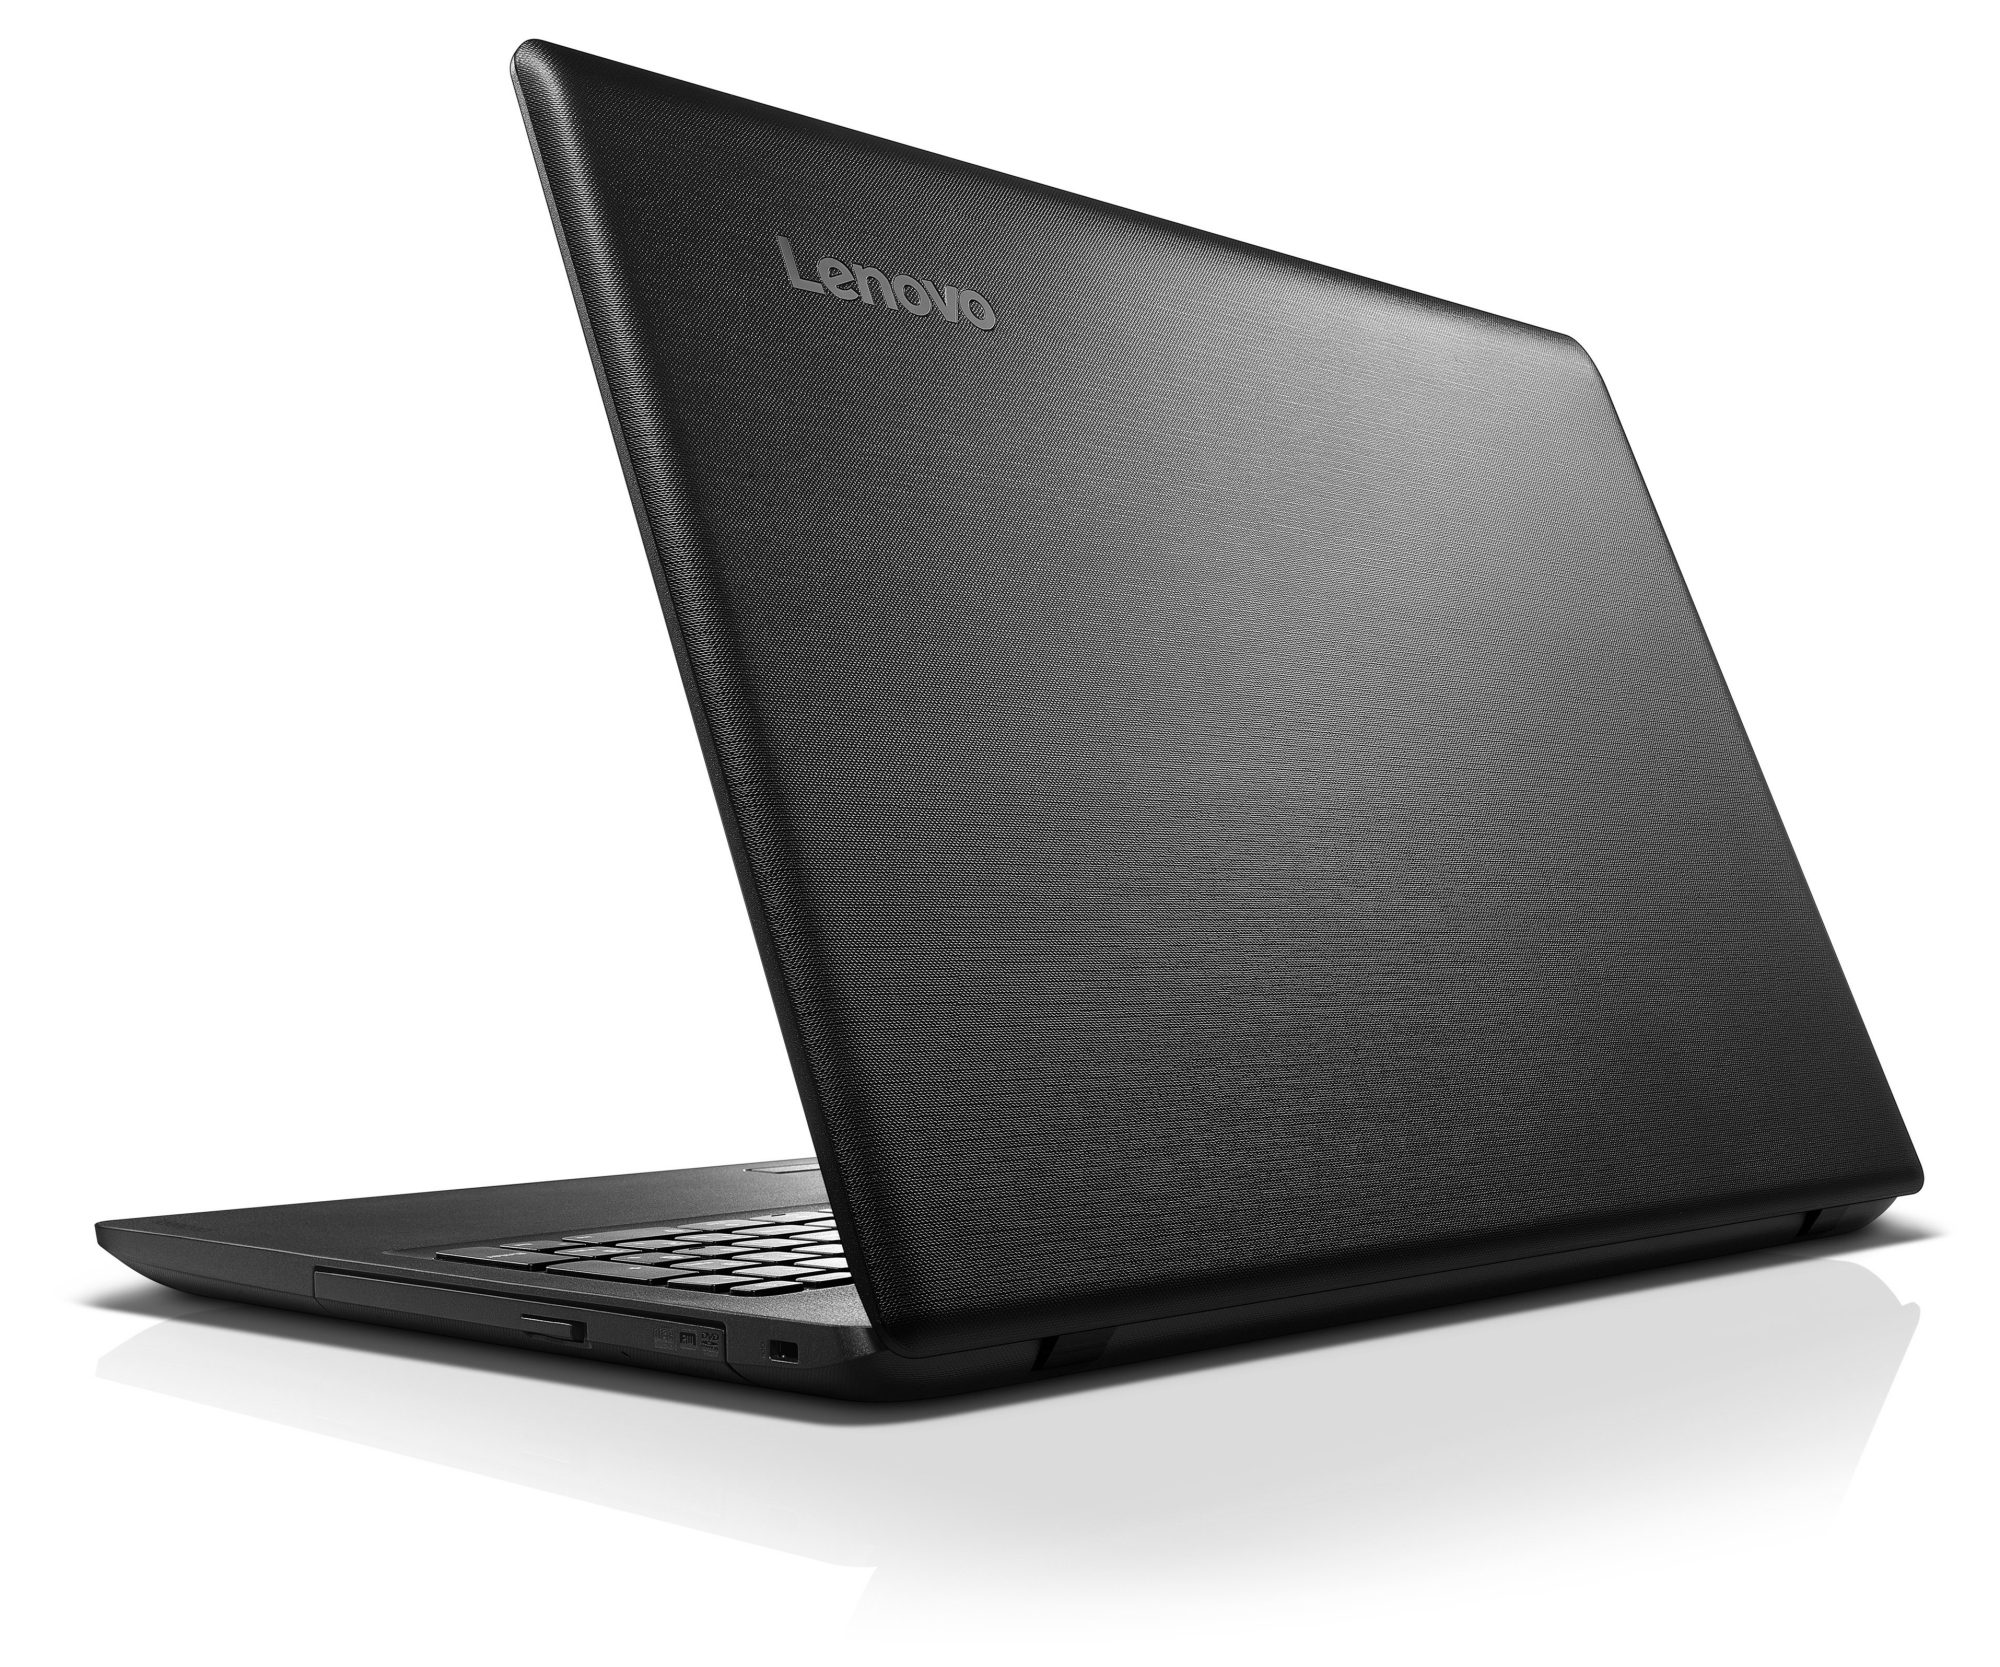 Леново ноутбук купить недорого. Lenovo IDEAPAD Flex 2. Lenovo Flex 2-14. Ноутбук Lenovo IDEAPAD g5045. Lenovo IDEAPAD g50-45.